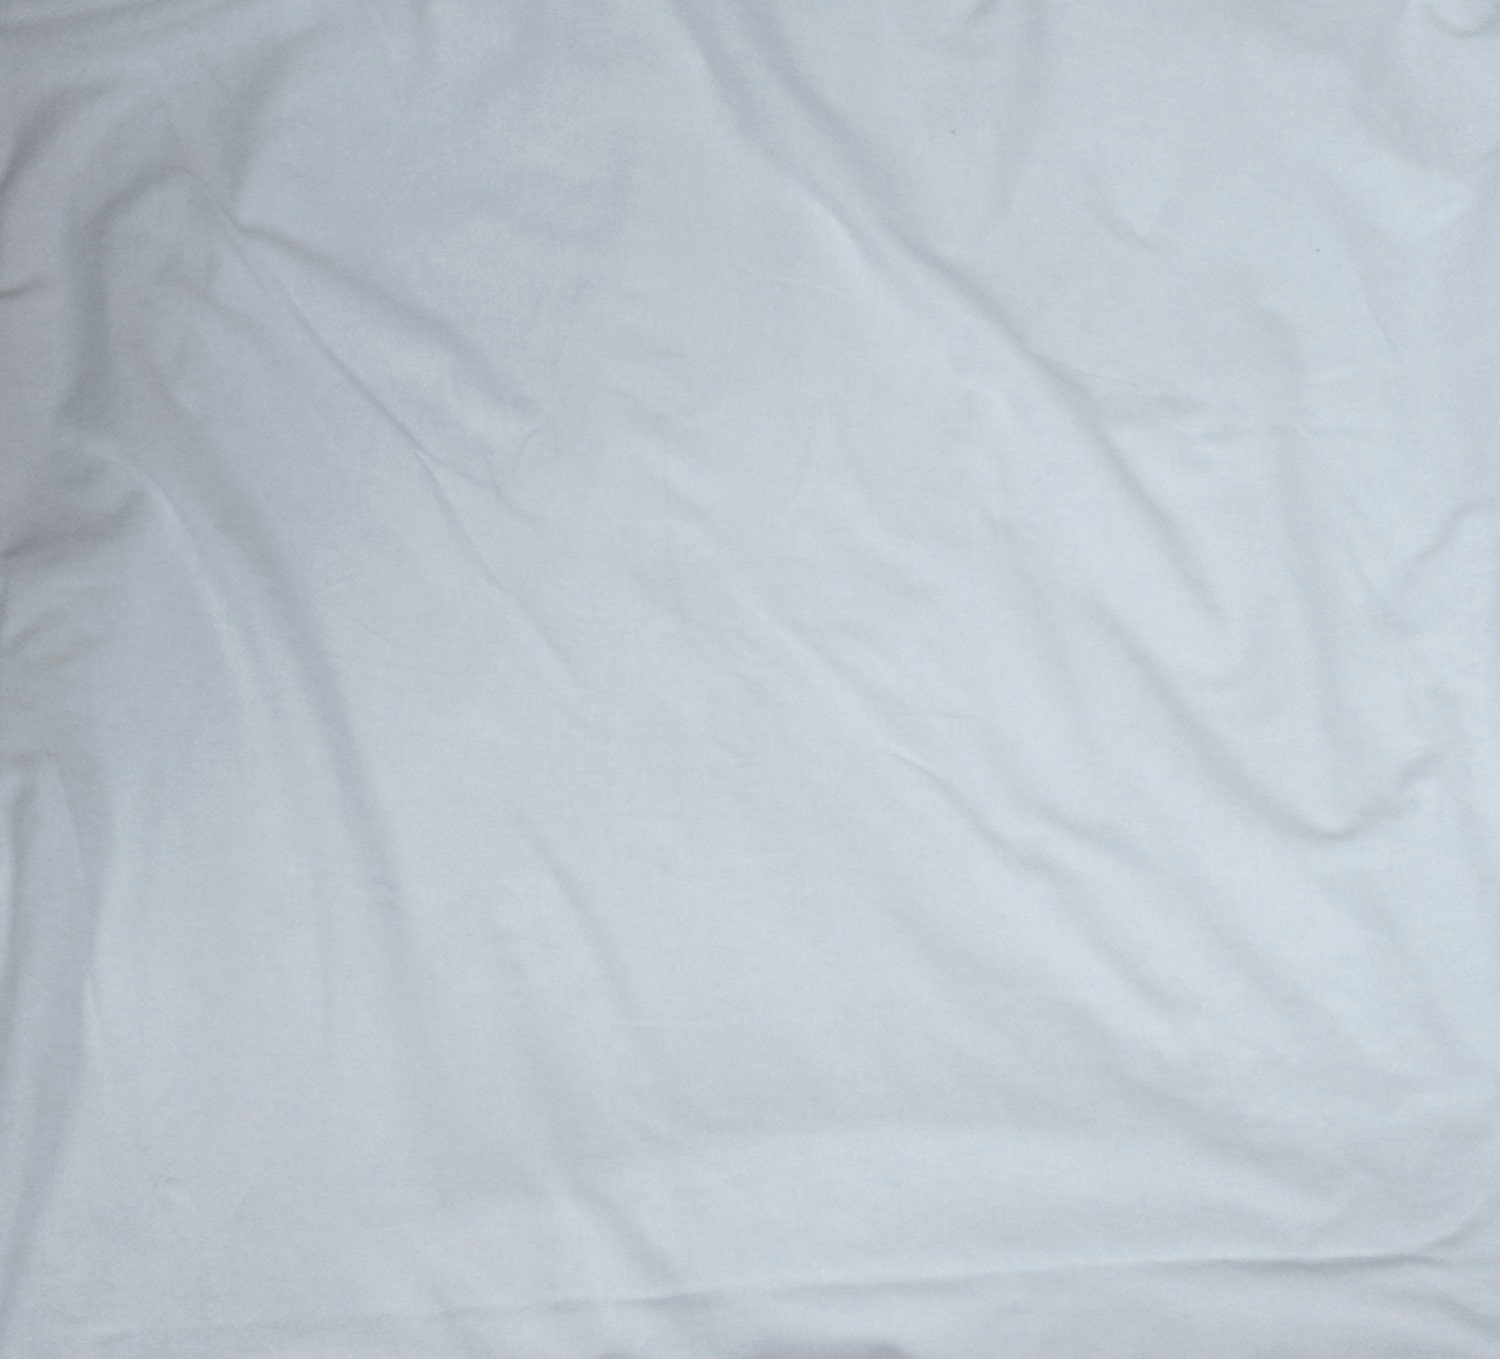 White Egyptian Cotton Spandex Fabric 4 Way Stretch Jersey Knit | Etsy